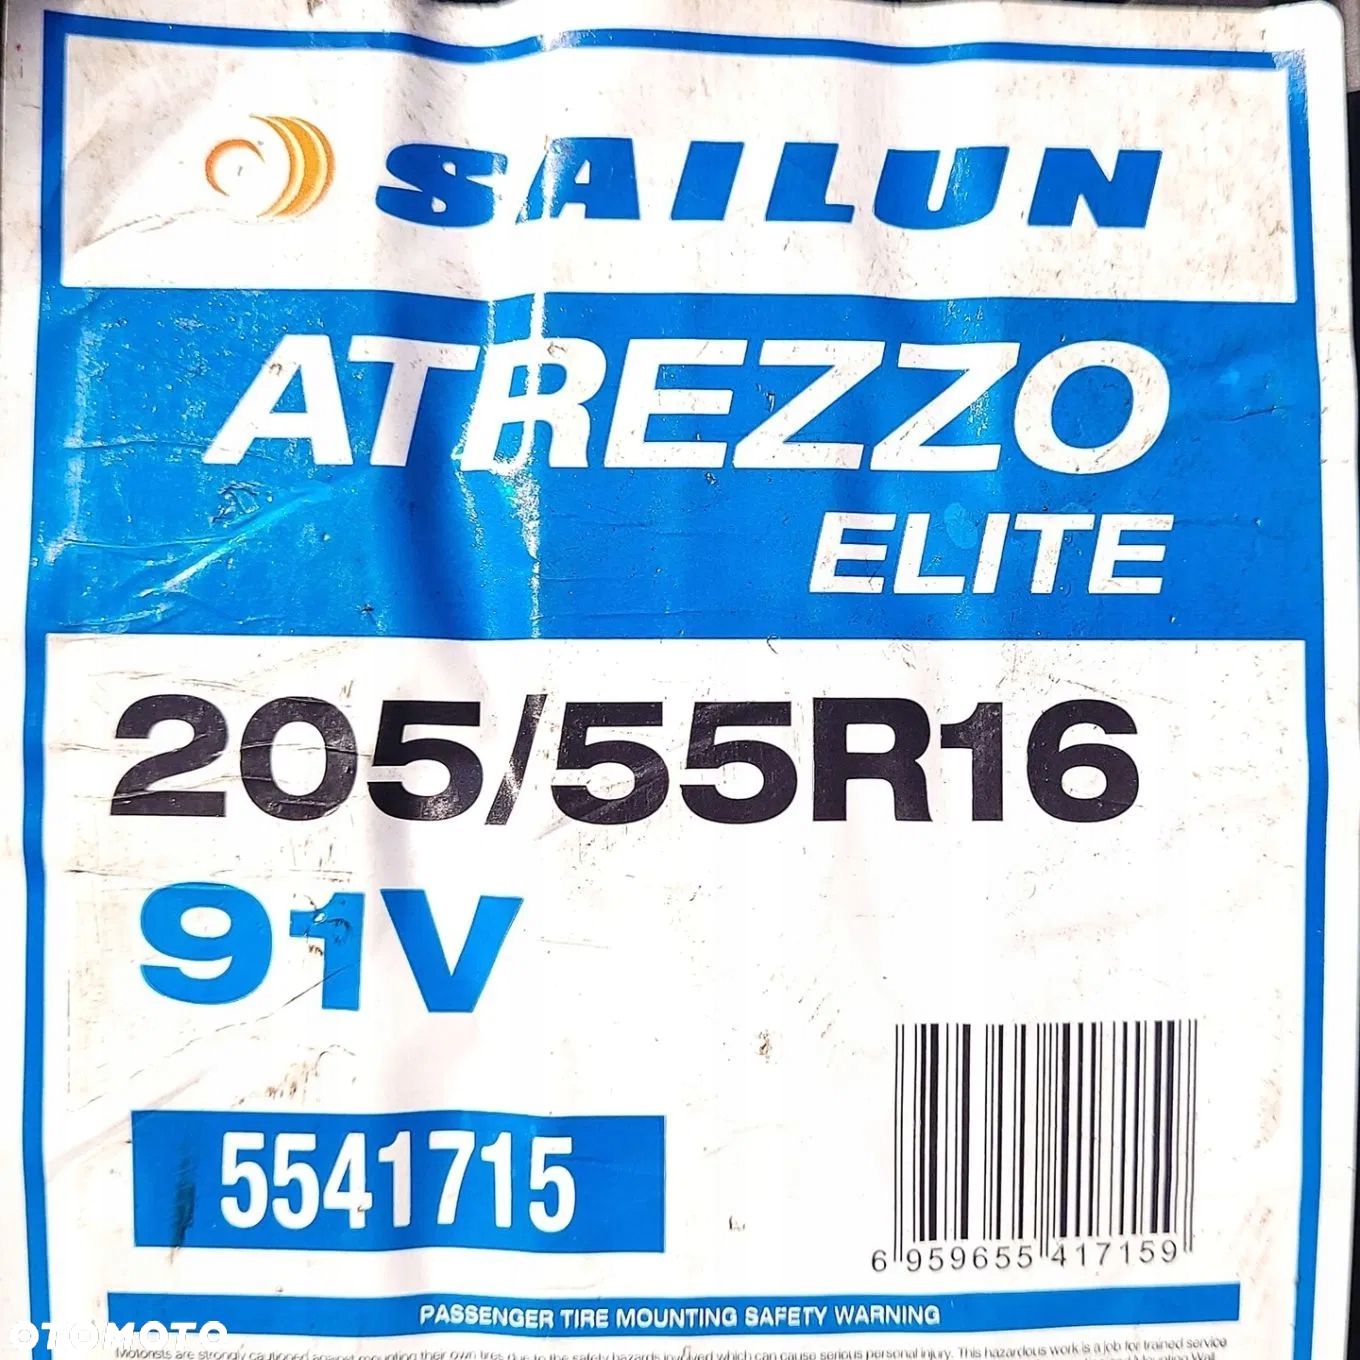 1x Sailun Atrezzo Elite 205/55R16 91V L284A - 4